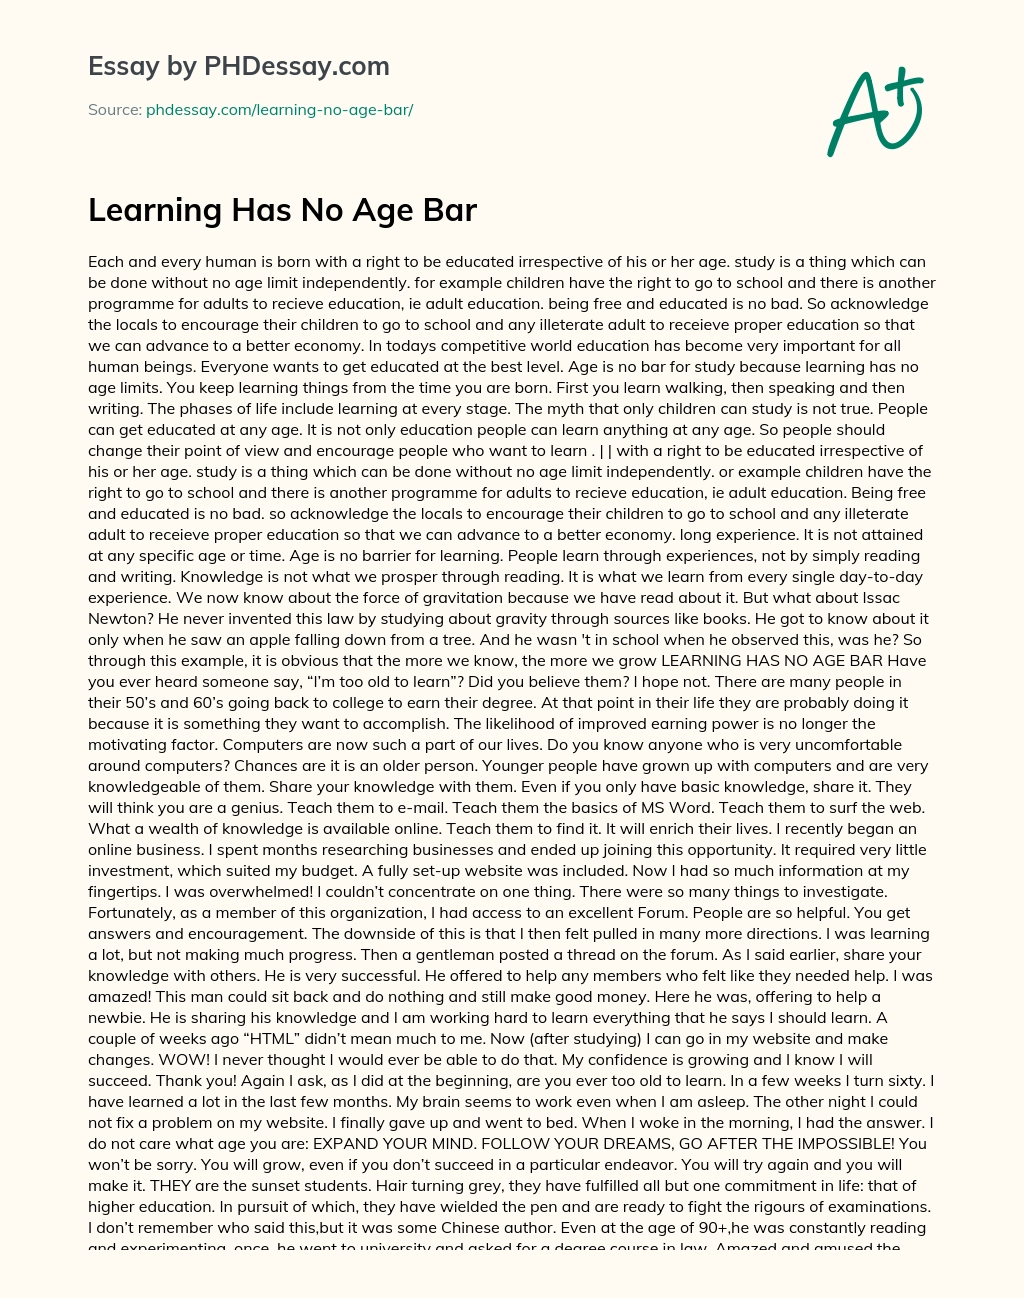 Learning Has No Age Bar essay